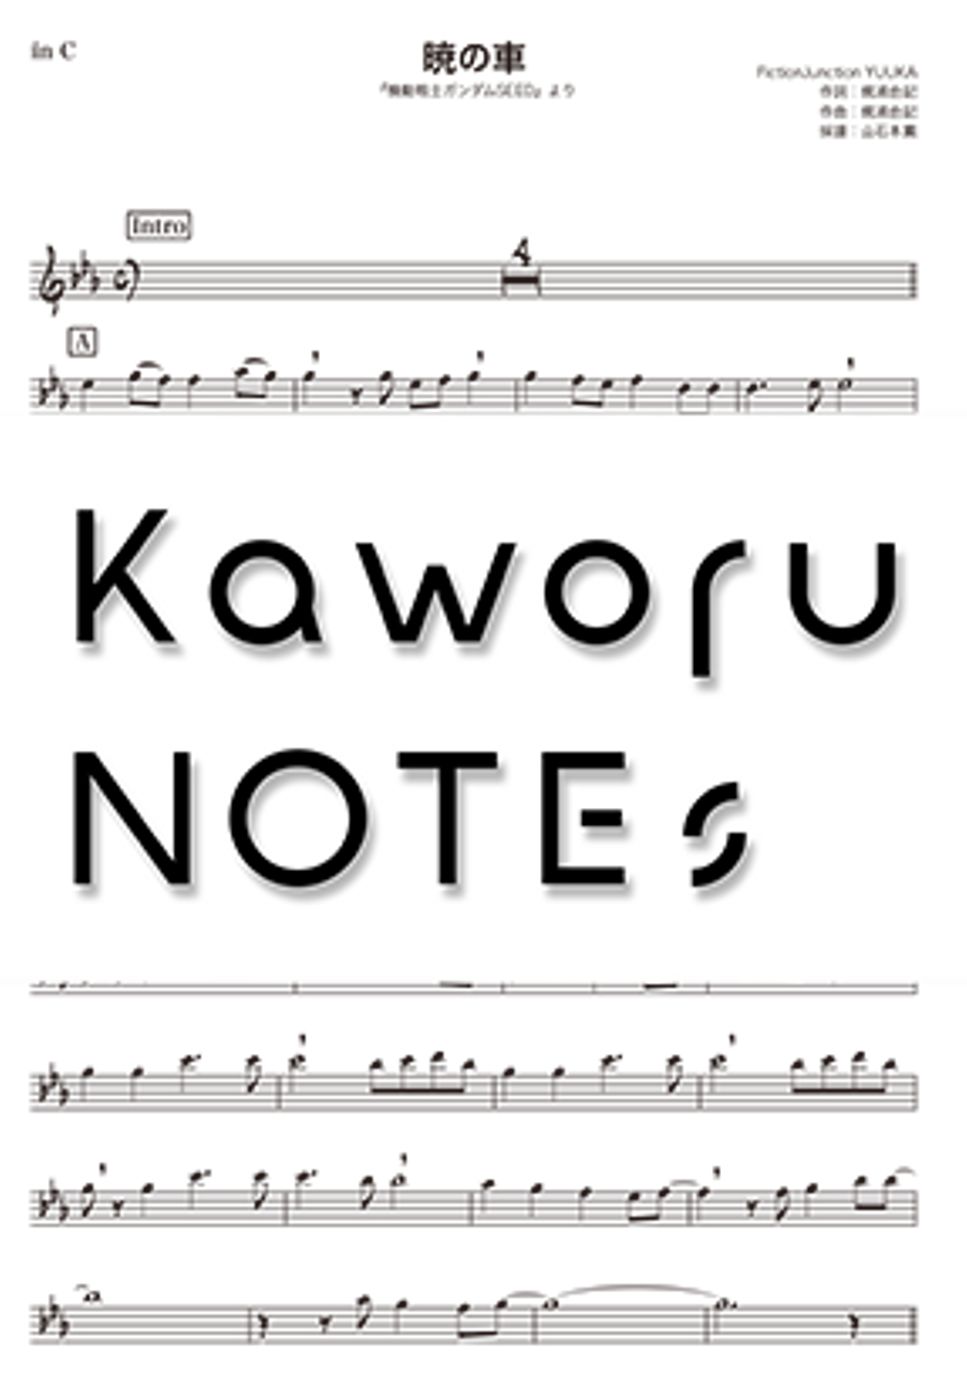 FictionJunction YUUKA - Akatsuki no Kuruma（bass clef/Mobile Suit Gundam SEED） by Kaworu NOTEs